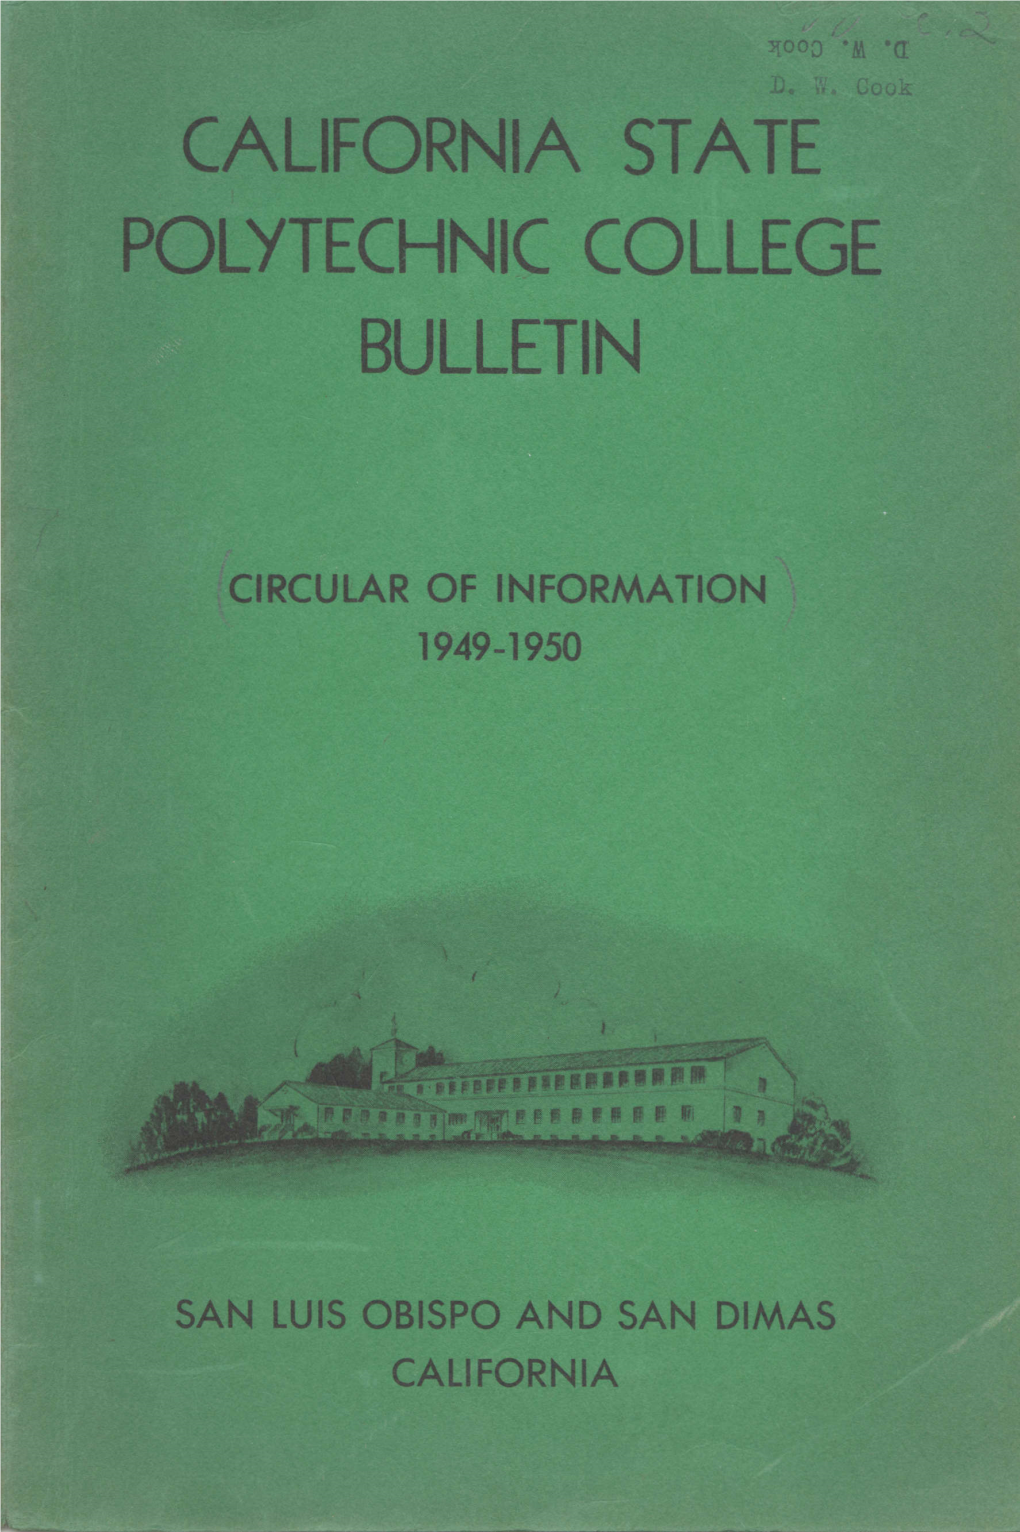 California State Polytechnic Circular of Information 1949-1950